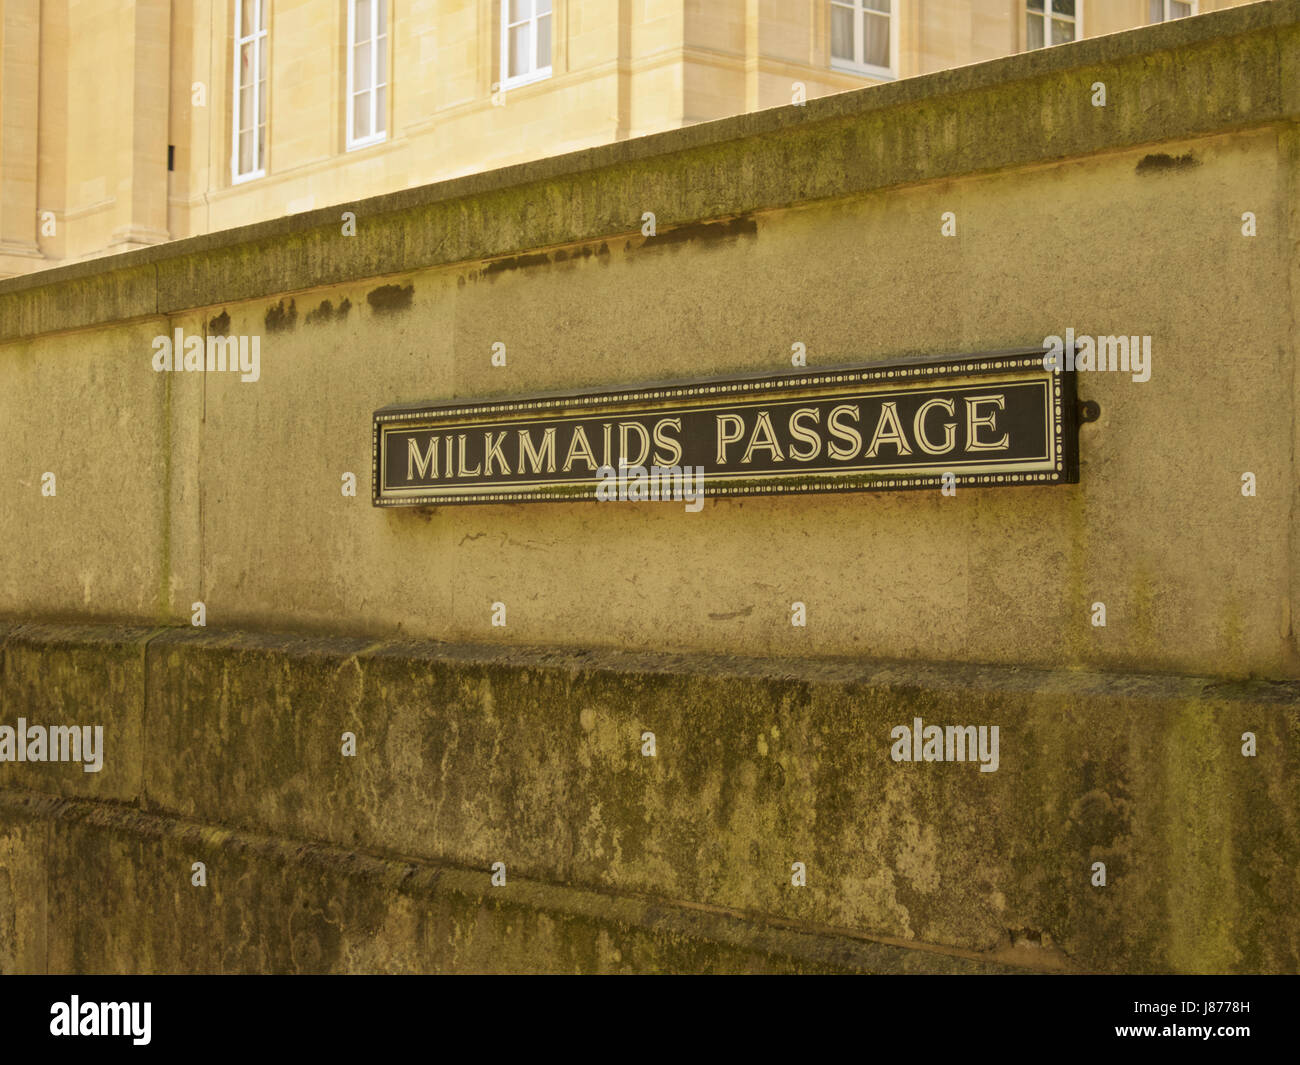 Milkmaids Passage in London Stock Photo